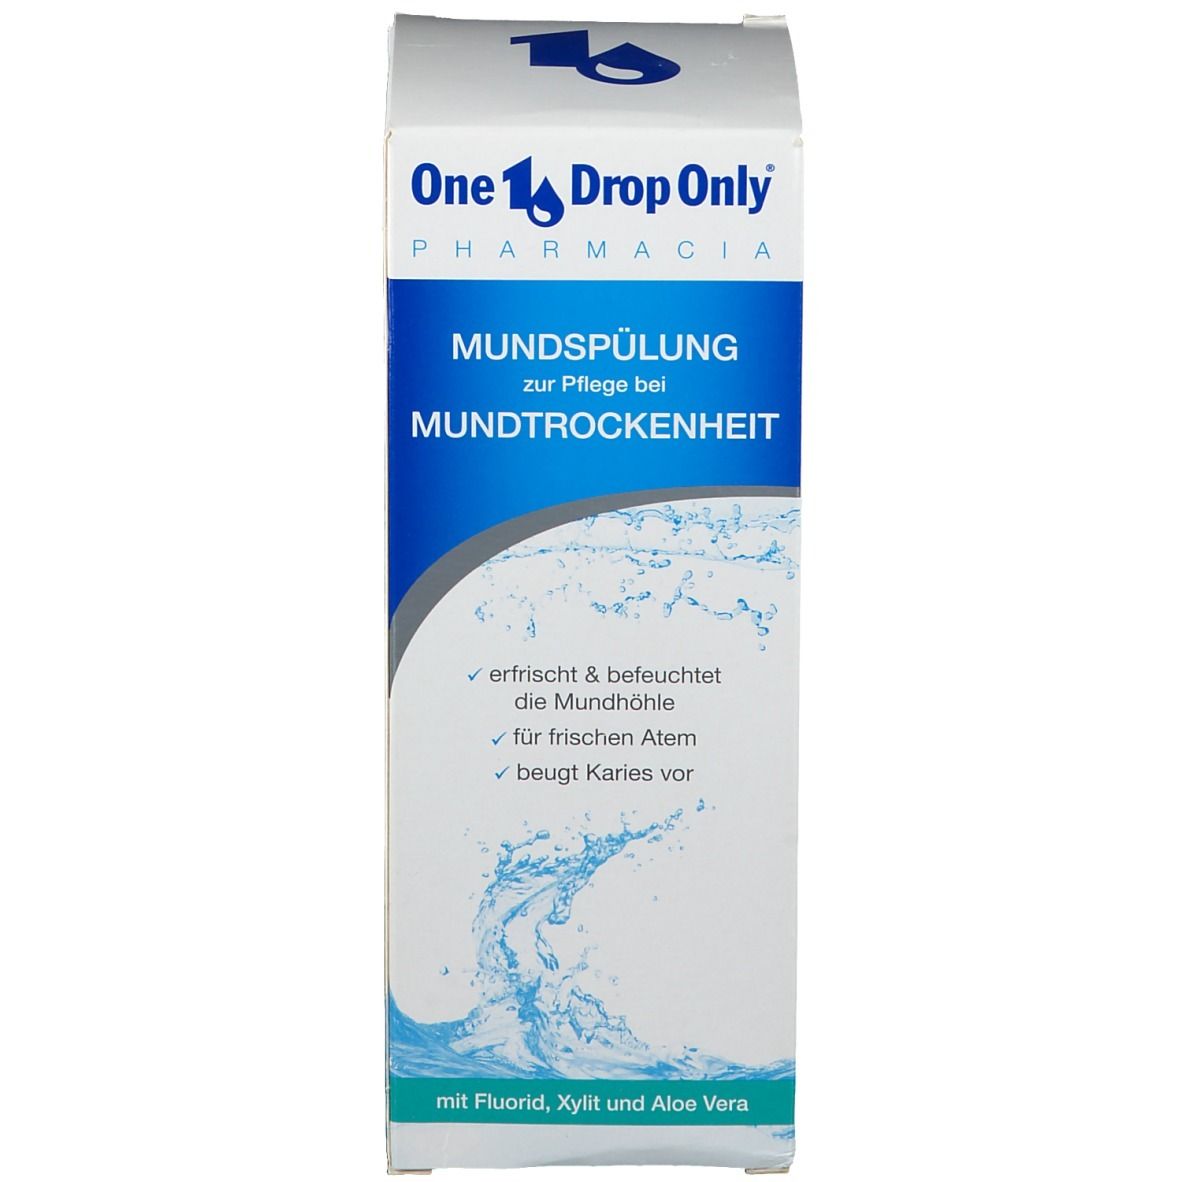 One Drop Only® Mündspülung bei Mundtrockenheit